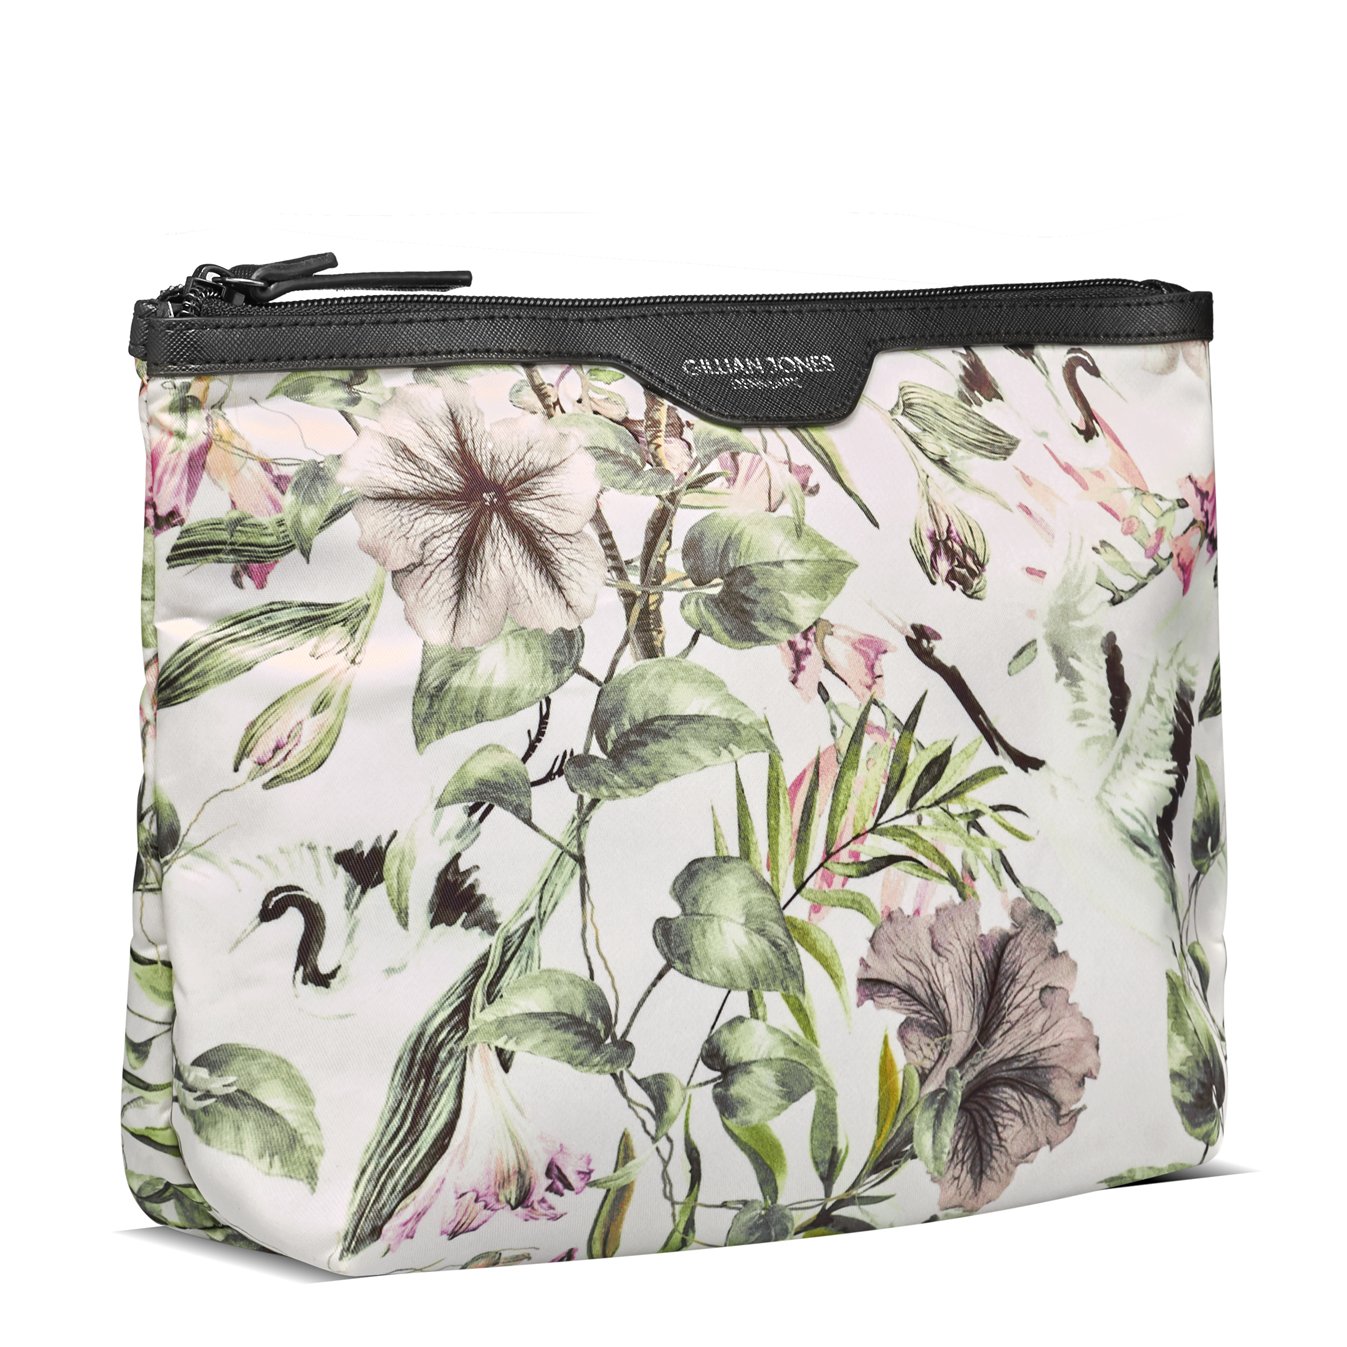 Gillian Jones - Urban Travel Cosmetic Bag - Flowers